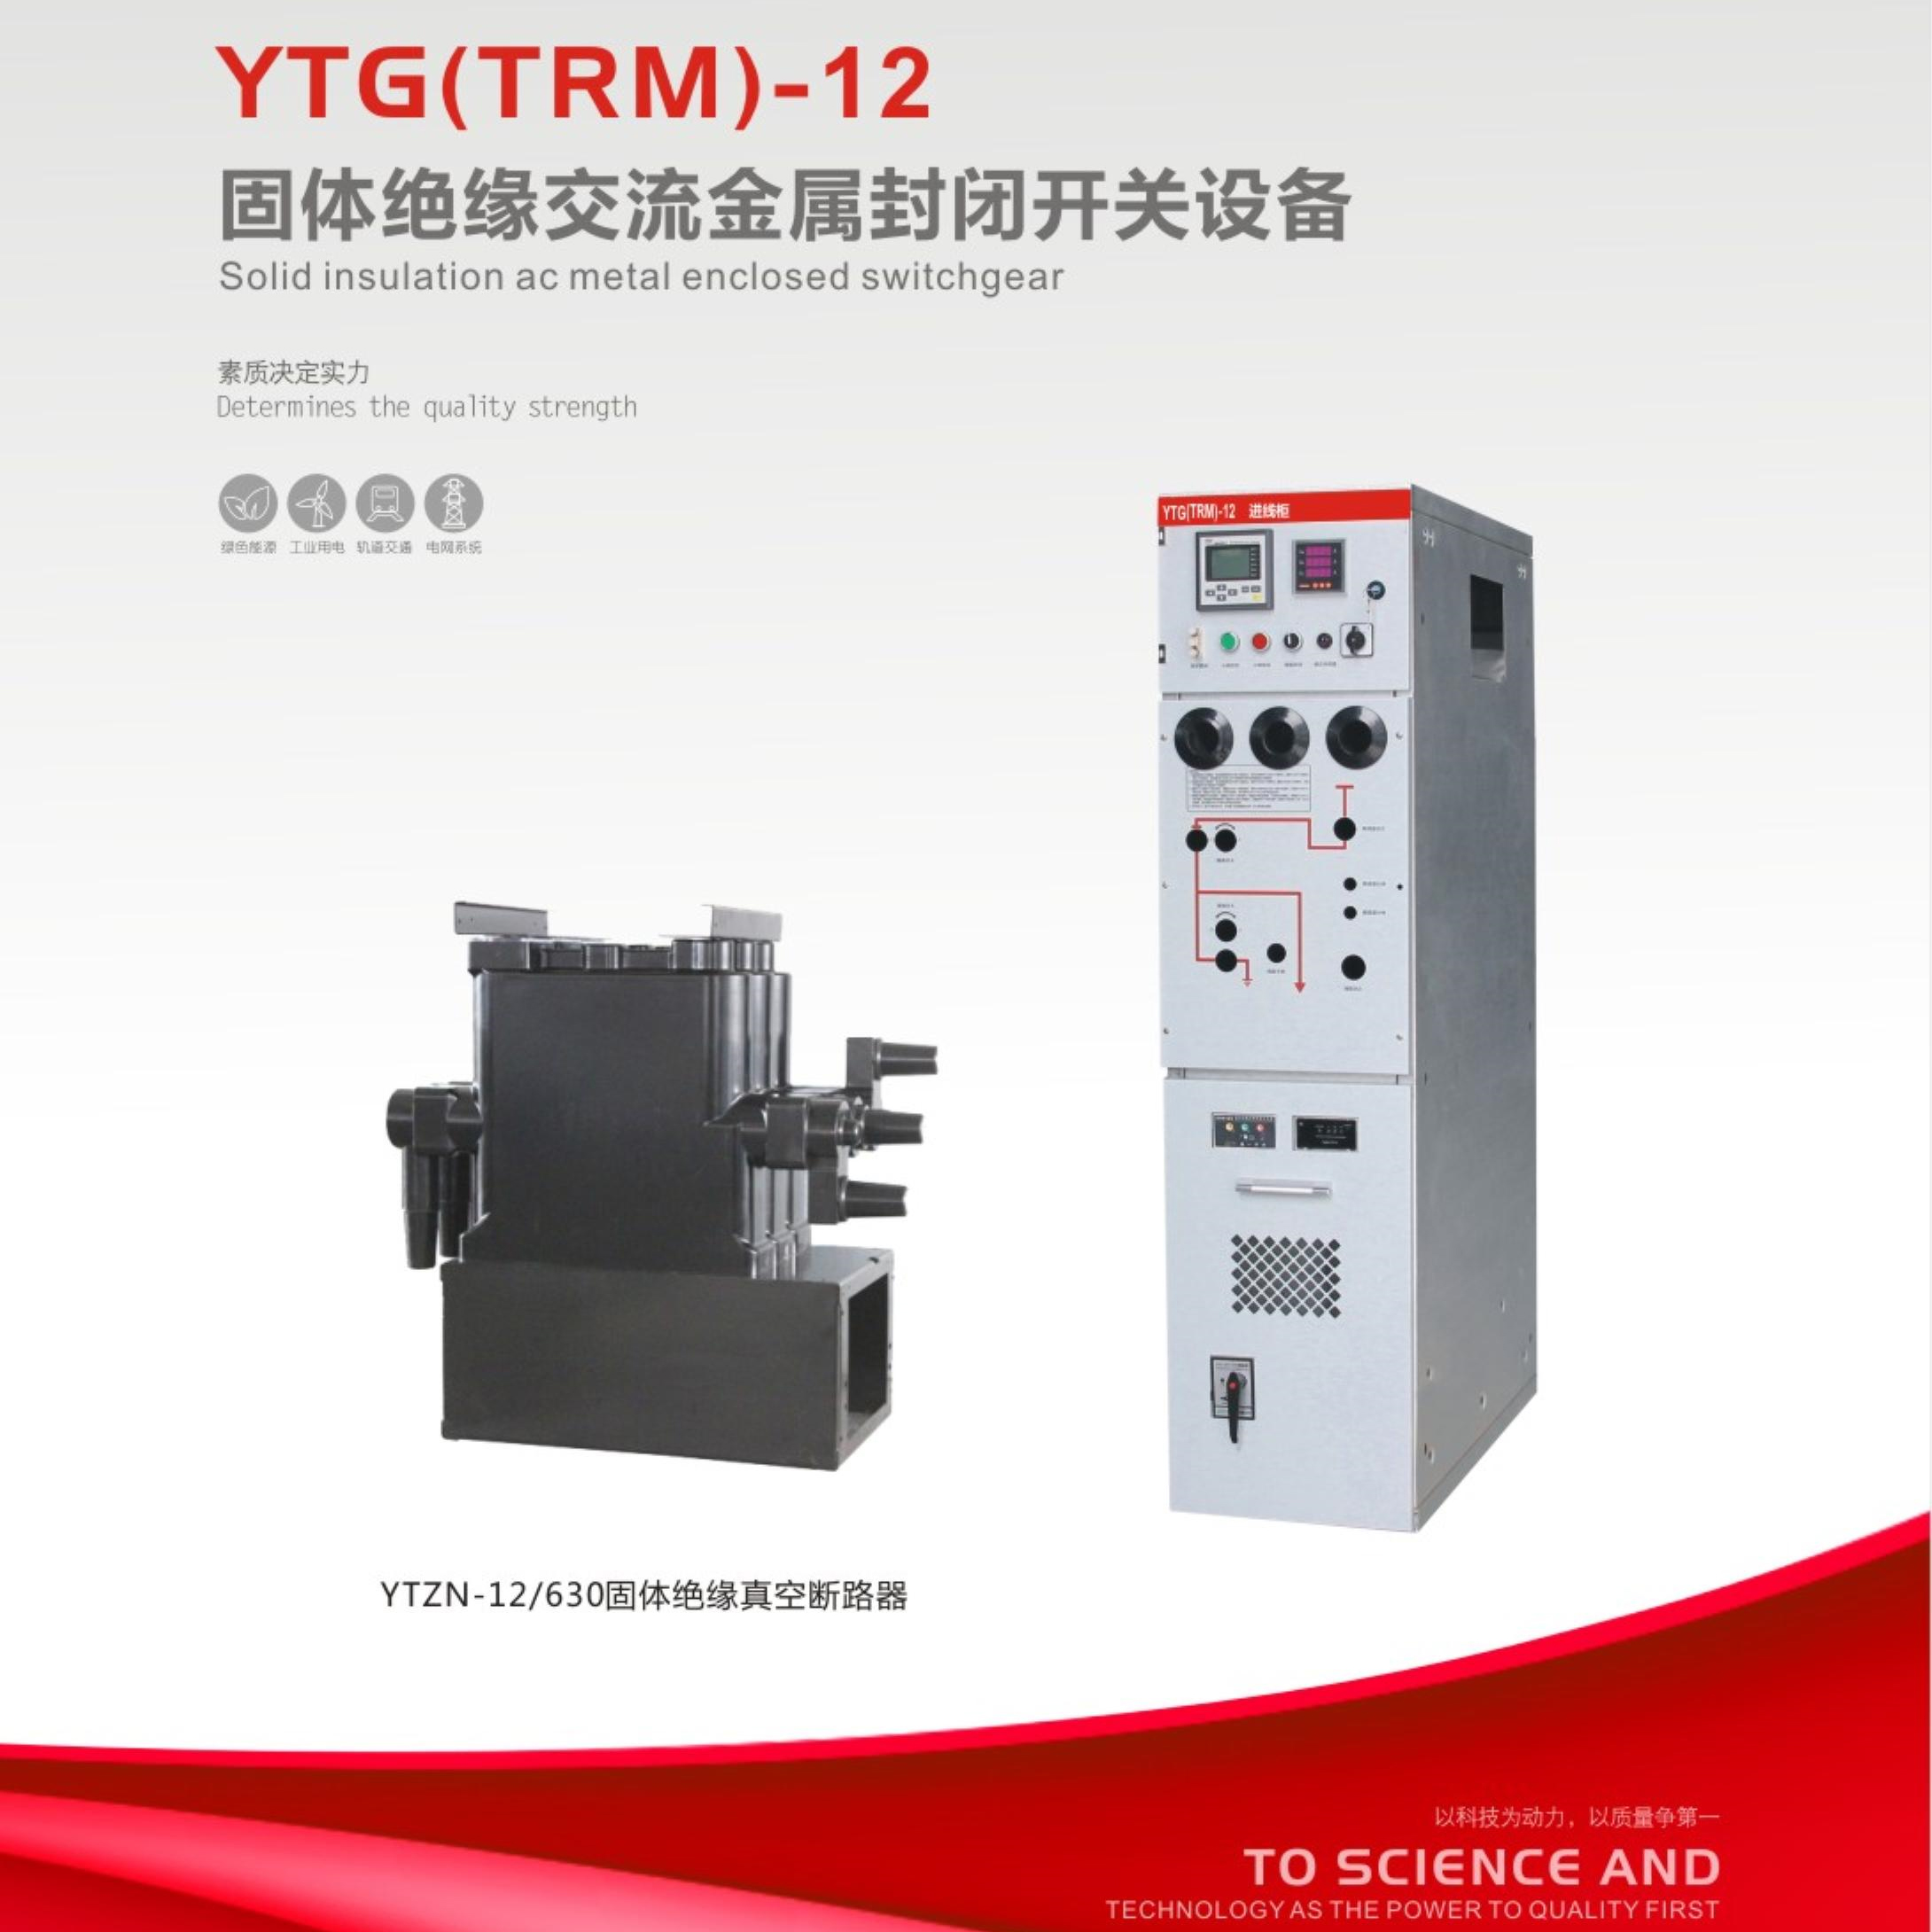 YTG(TRM)-12固体绝缘交流金属封闭开关设备